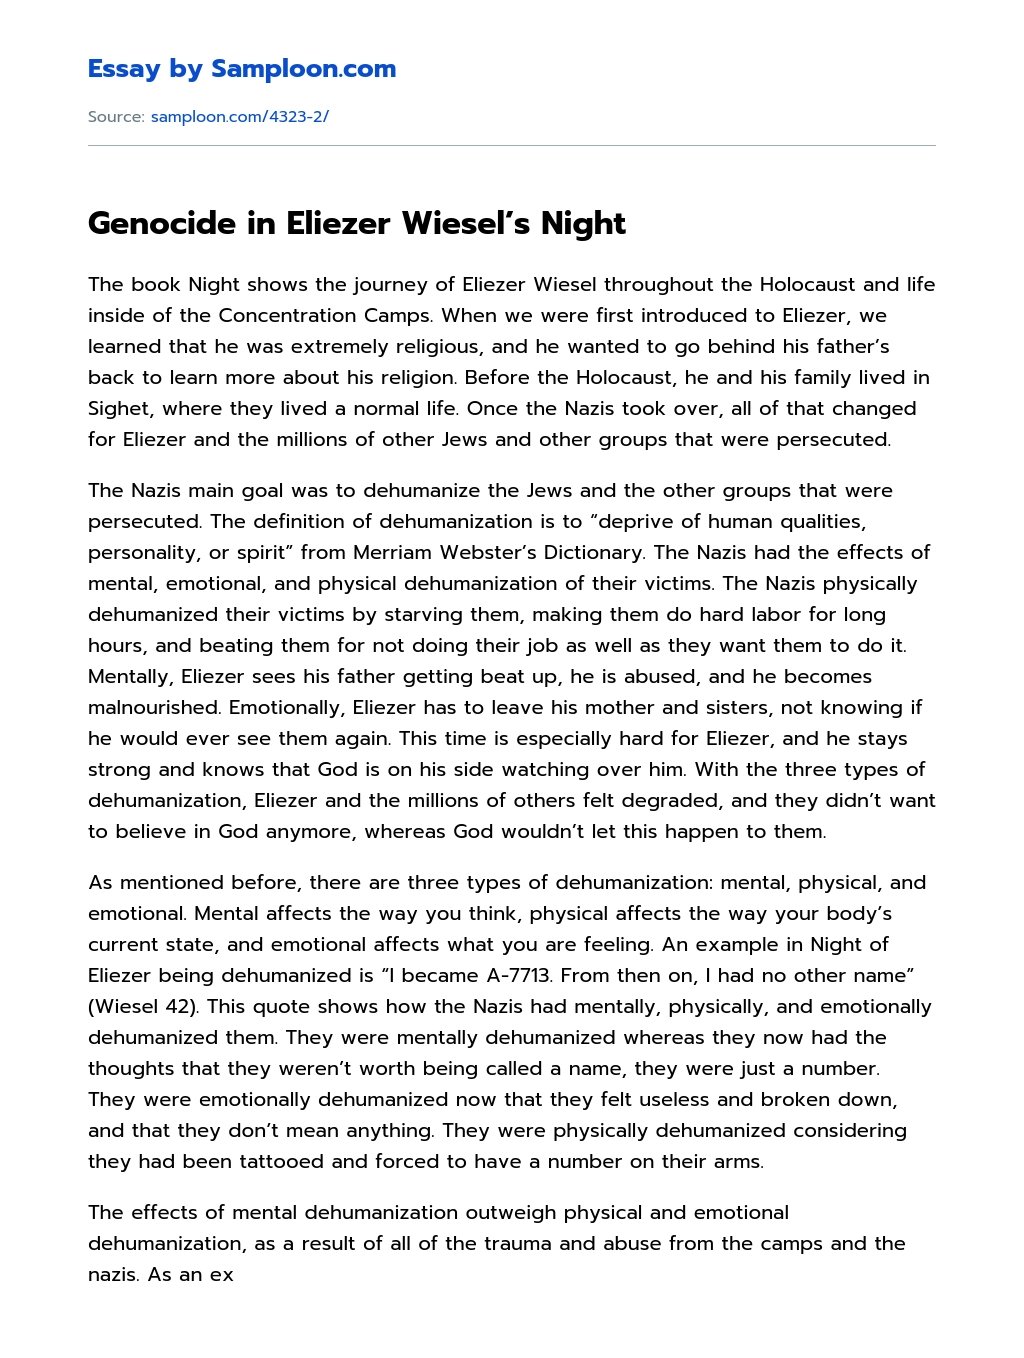 Genocide in Eliezer Wiesel’s Night essay